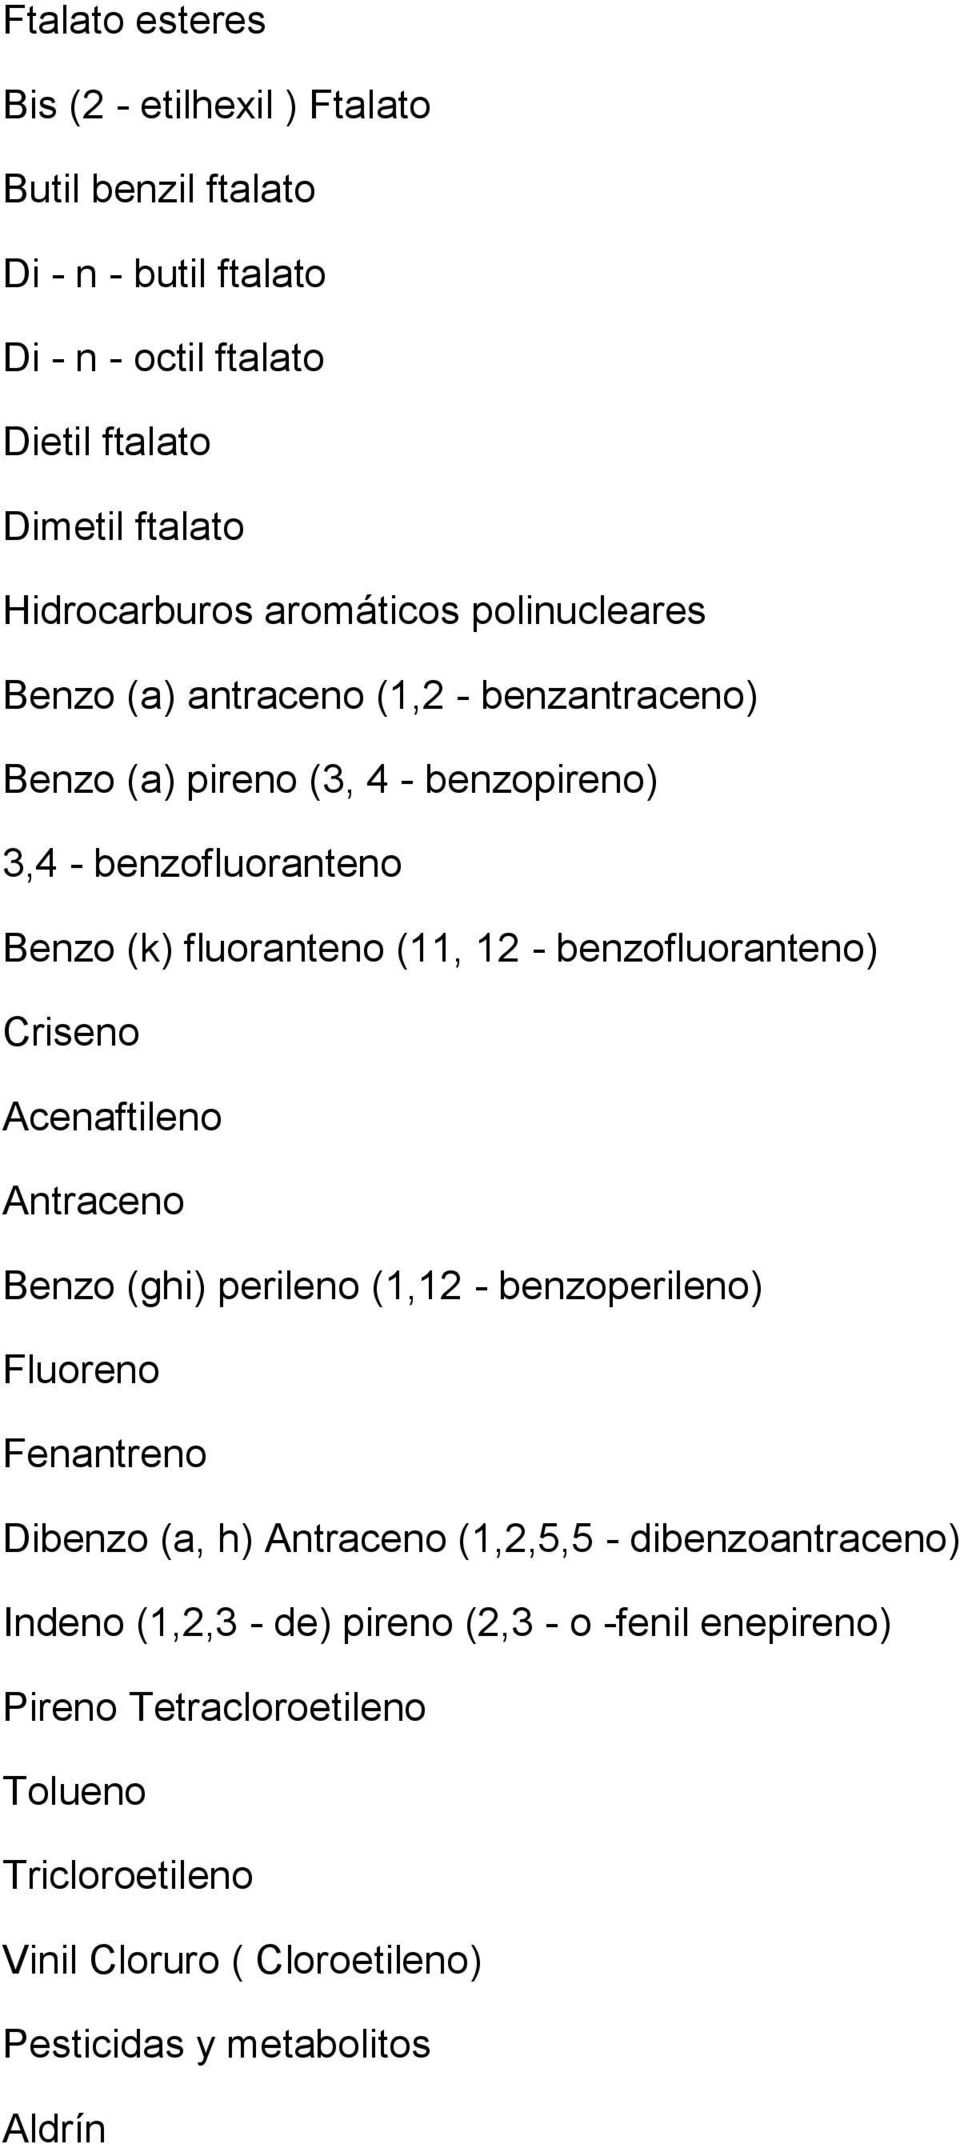 benzofluoranteno) Criseno Acenaftileno Antraceno Benzo (ghi) perileno (1,12 - benzoperileno) Fluoreno Fenantreno Dibenzo (a, h) Antraceno (1,2,5,5 -